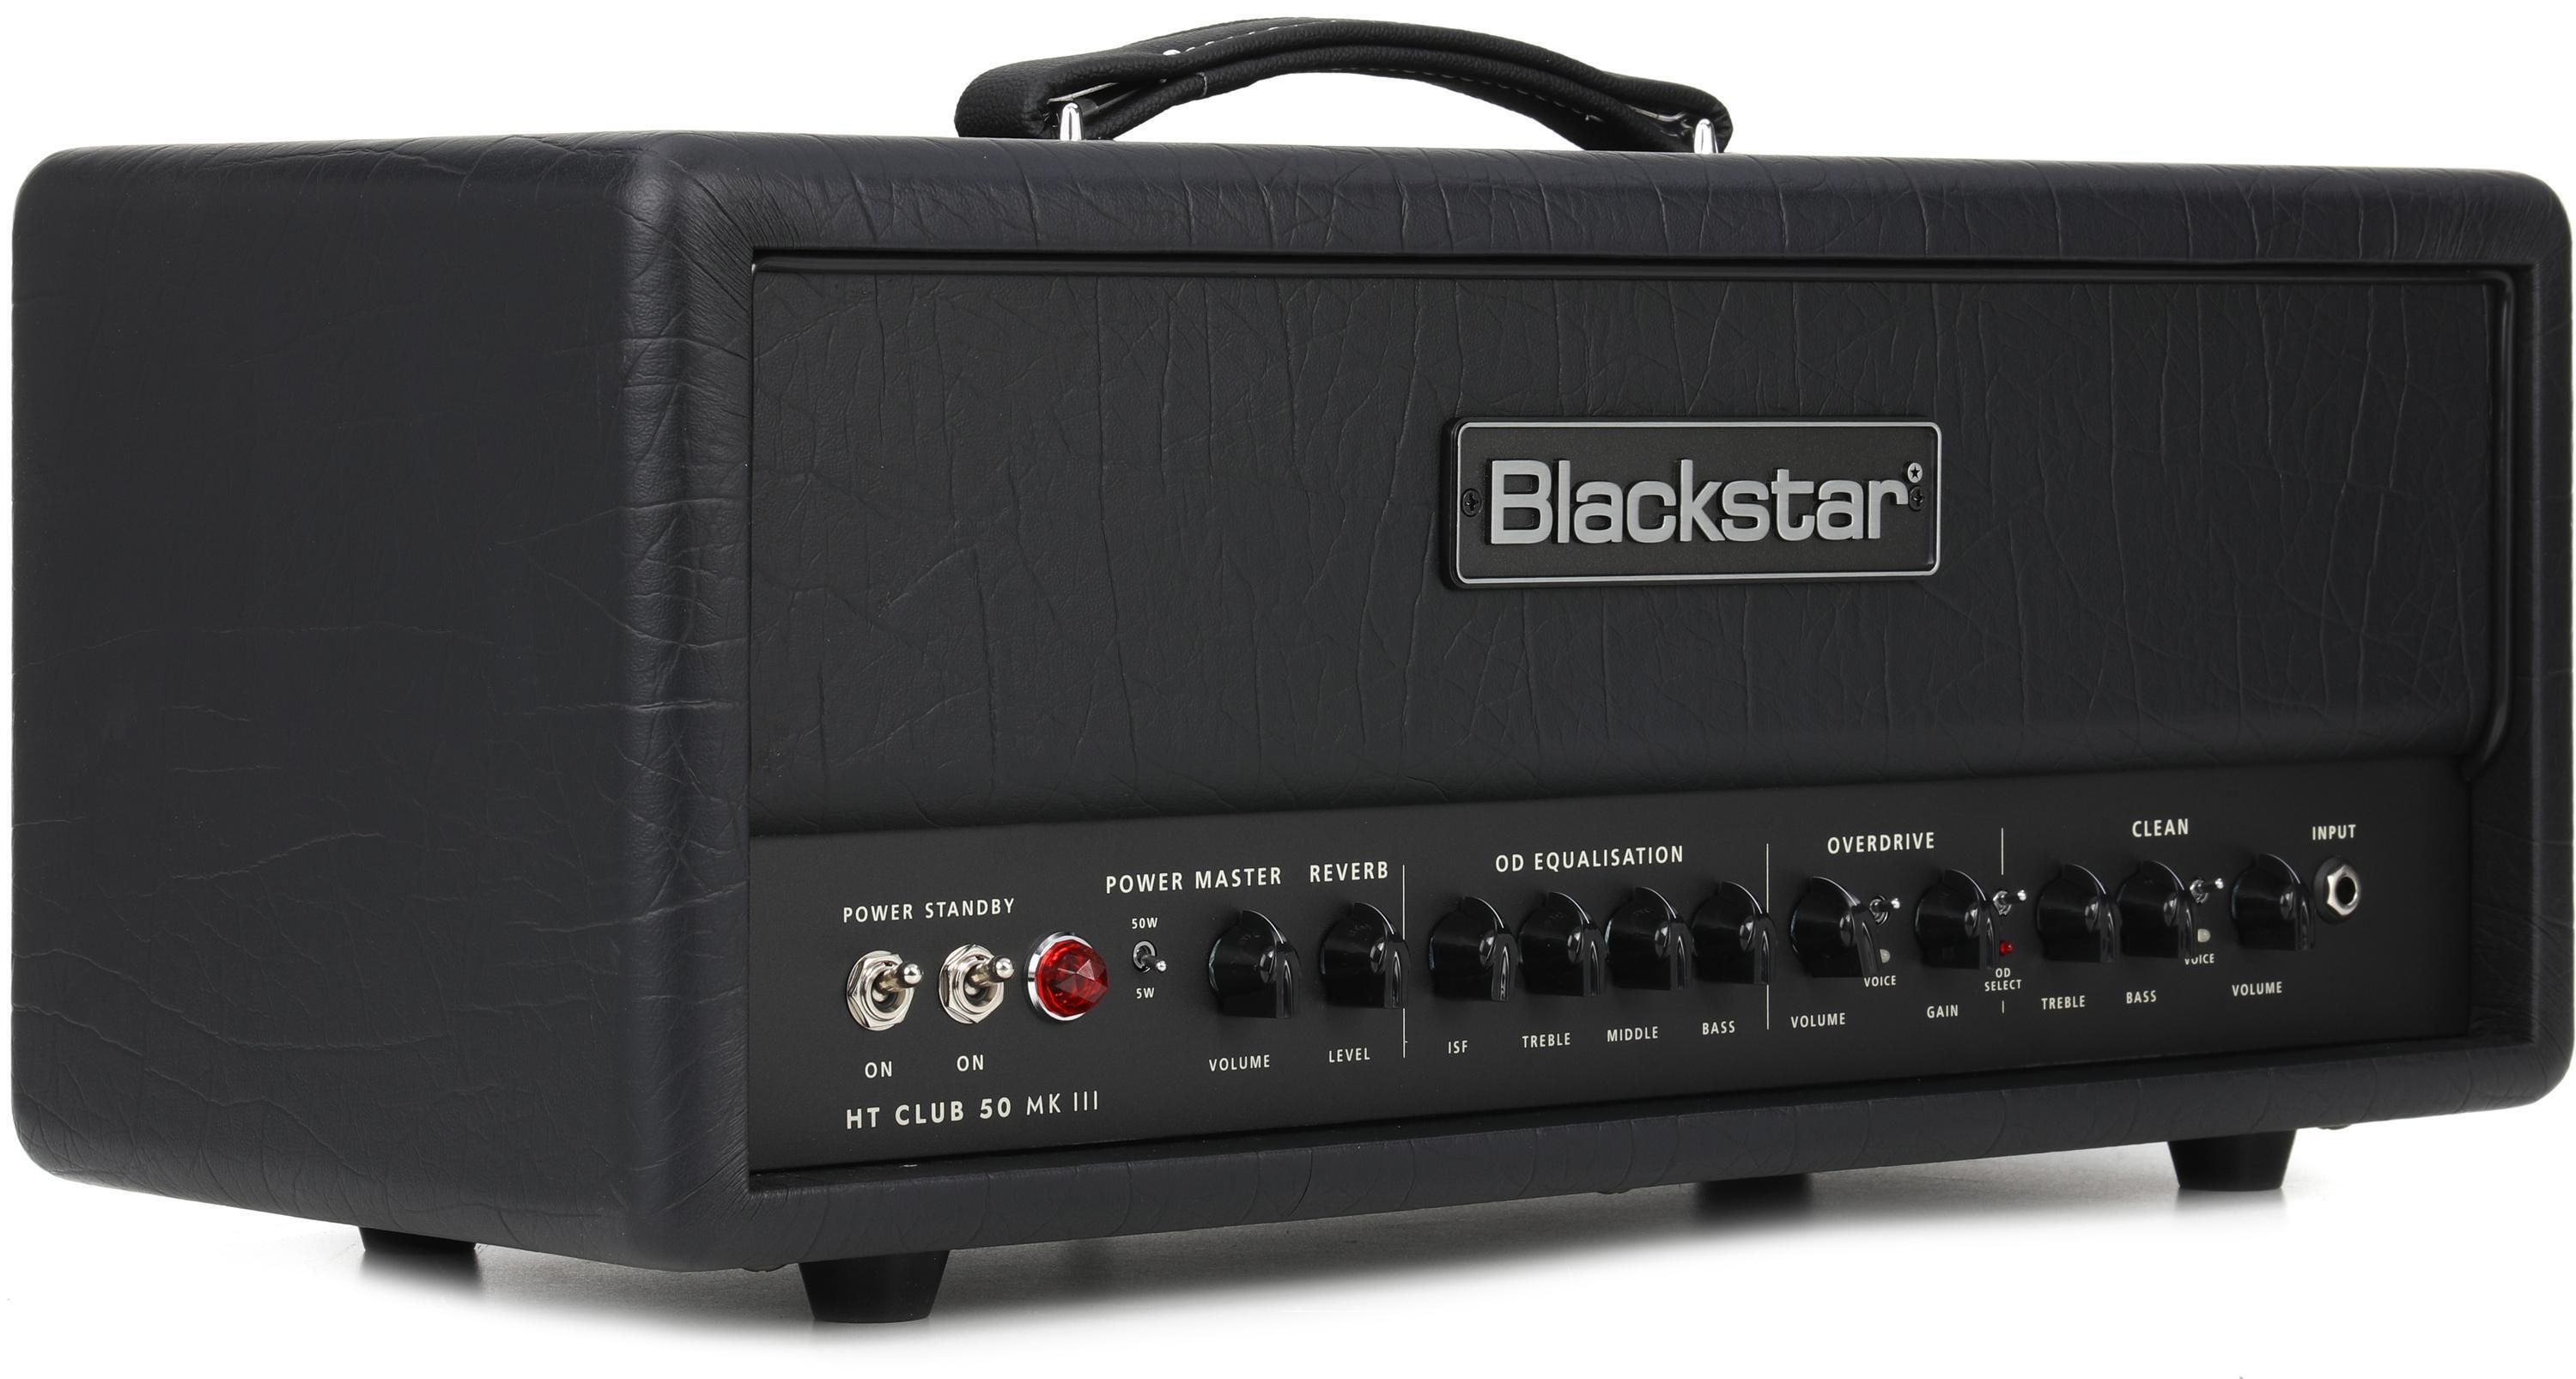 Bundled Item: Blackstar HT Club 50 MK III 50-watt Tube Amplifier Head